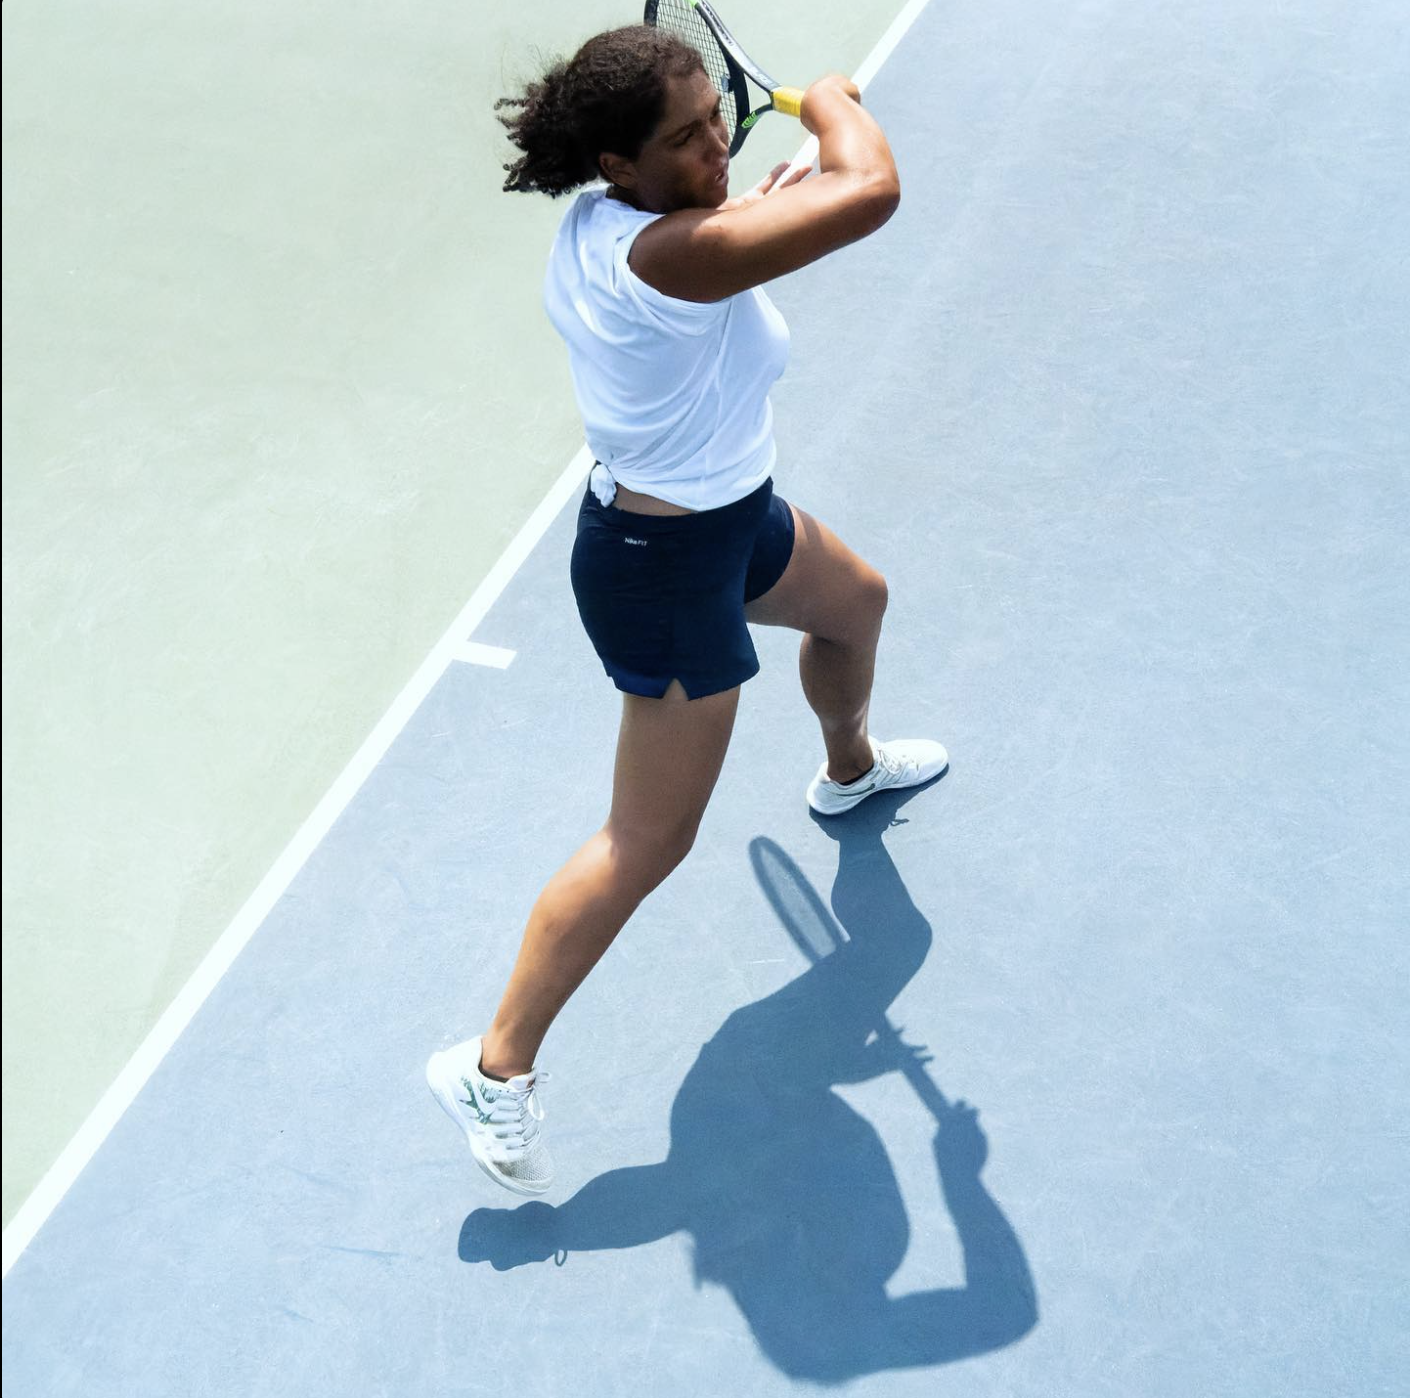 Image 2 of 6 of Tennis Innovators - Astoria Park court